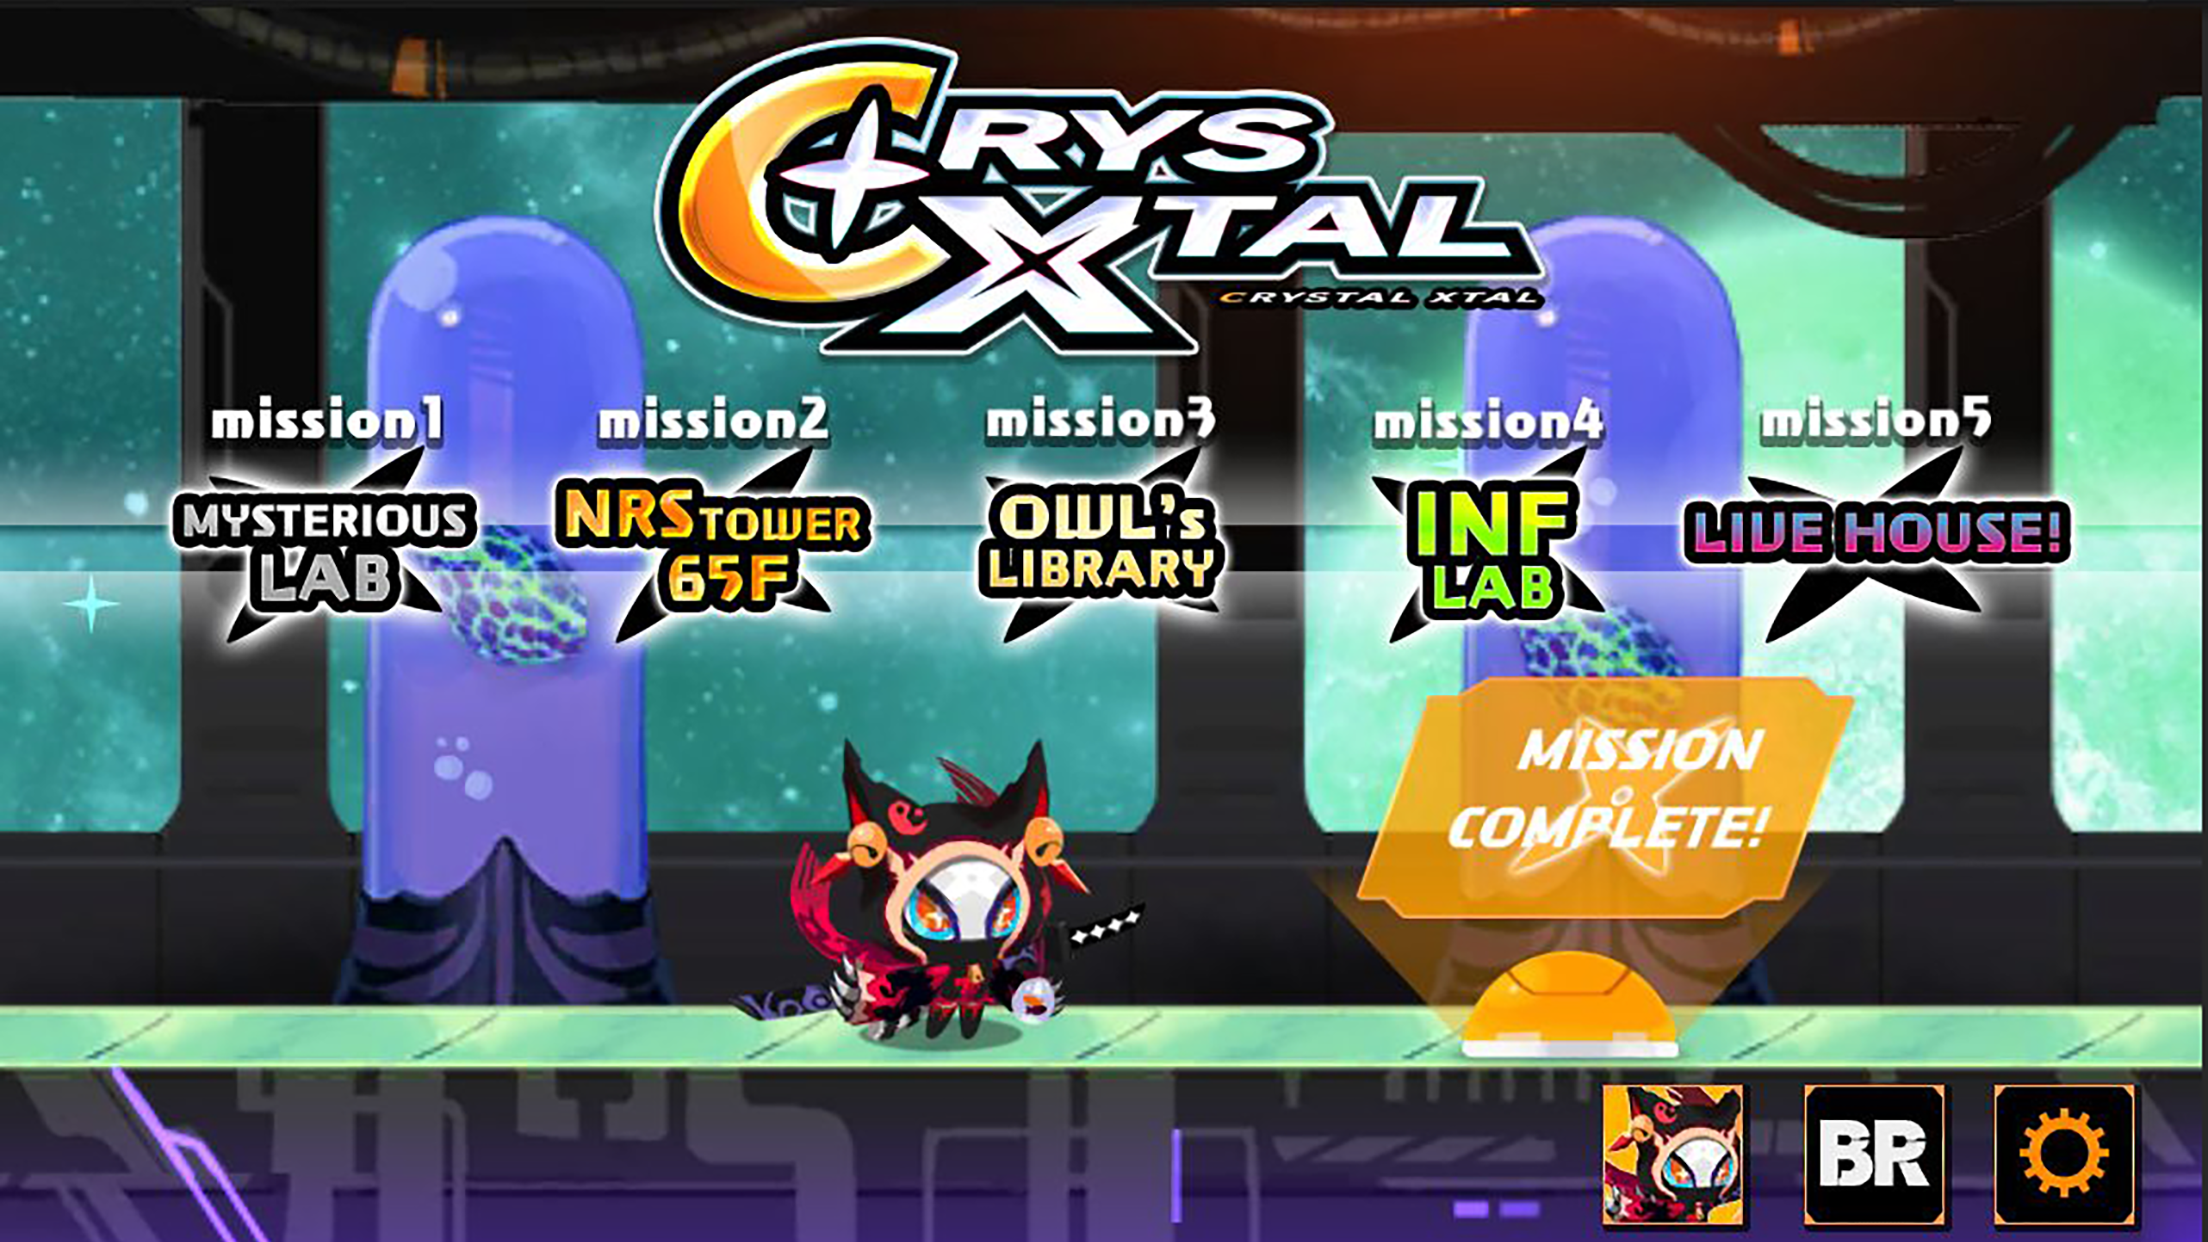 Screenshot 1 of CRYSTAL XTAL - Ninja ကြောင်ပစ်ခတ်မှု 1.3